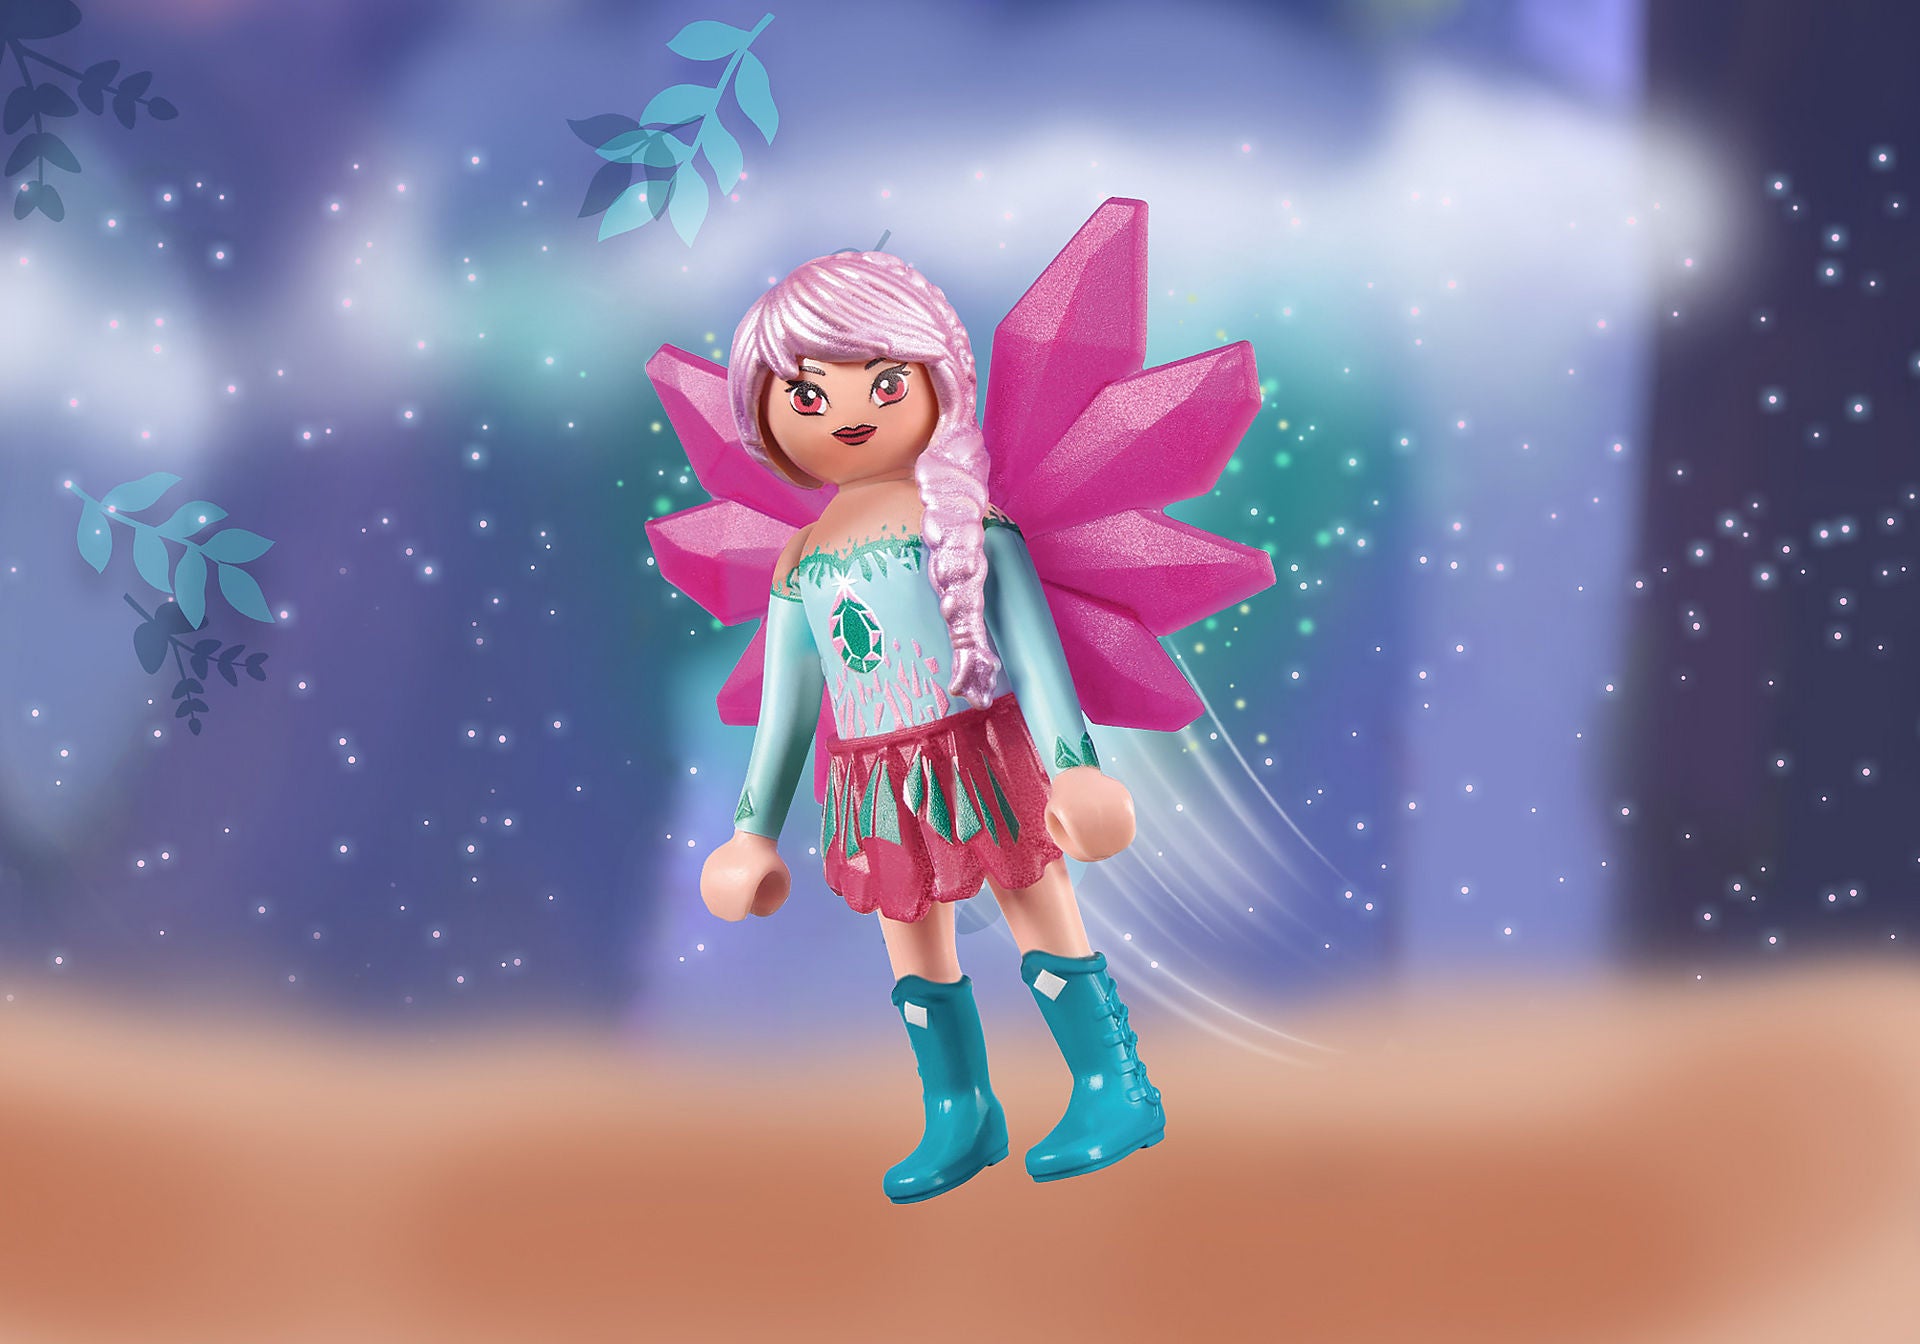 Playmobil Adventures of Ayuma: Cristal Fairy Elvi 71181